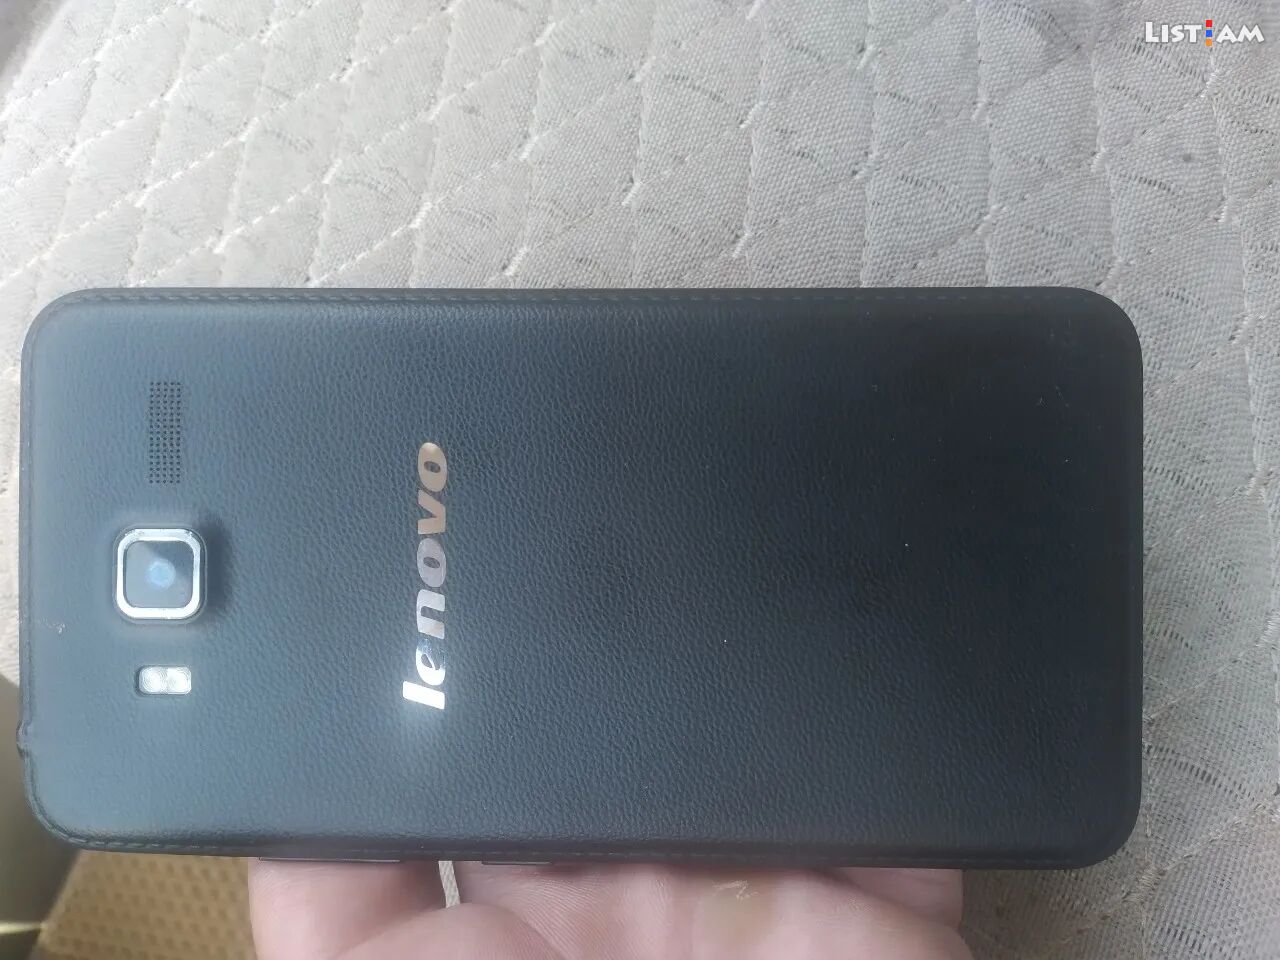 Lenovo A916, 8 GB